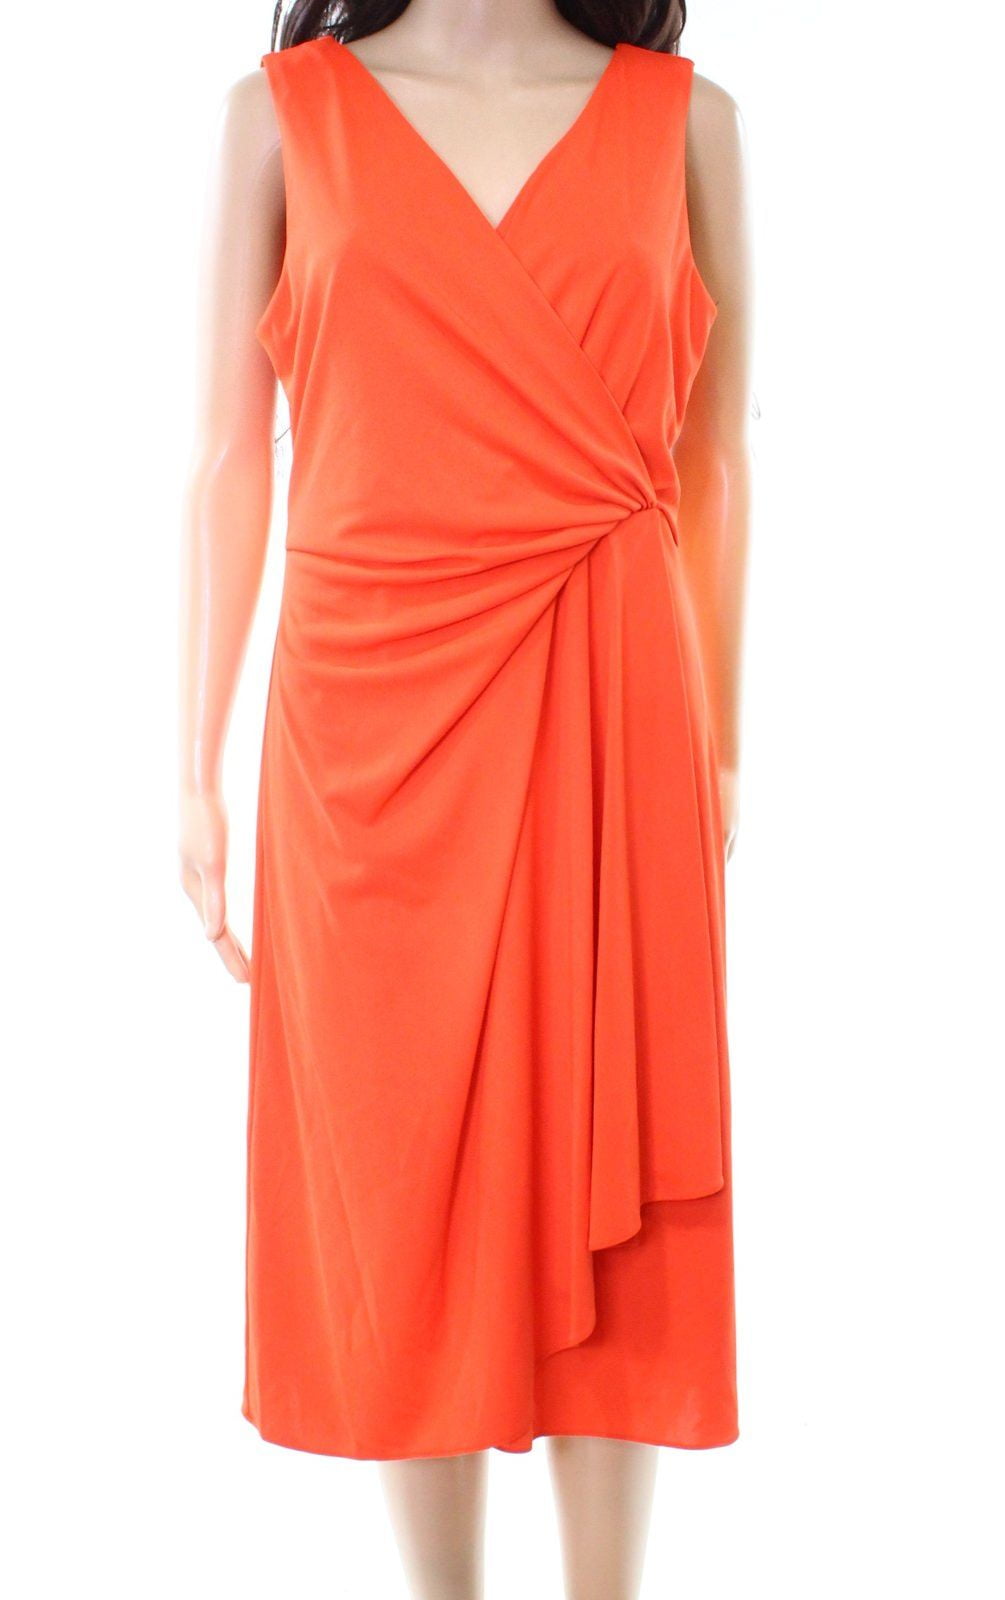 DKNY - DKNY NEW Deep Orange Womens Size 10 Surplice Draped Sheath Dress ...